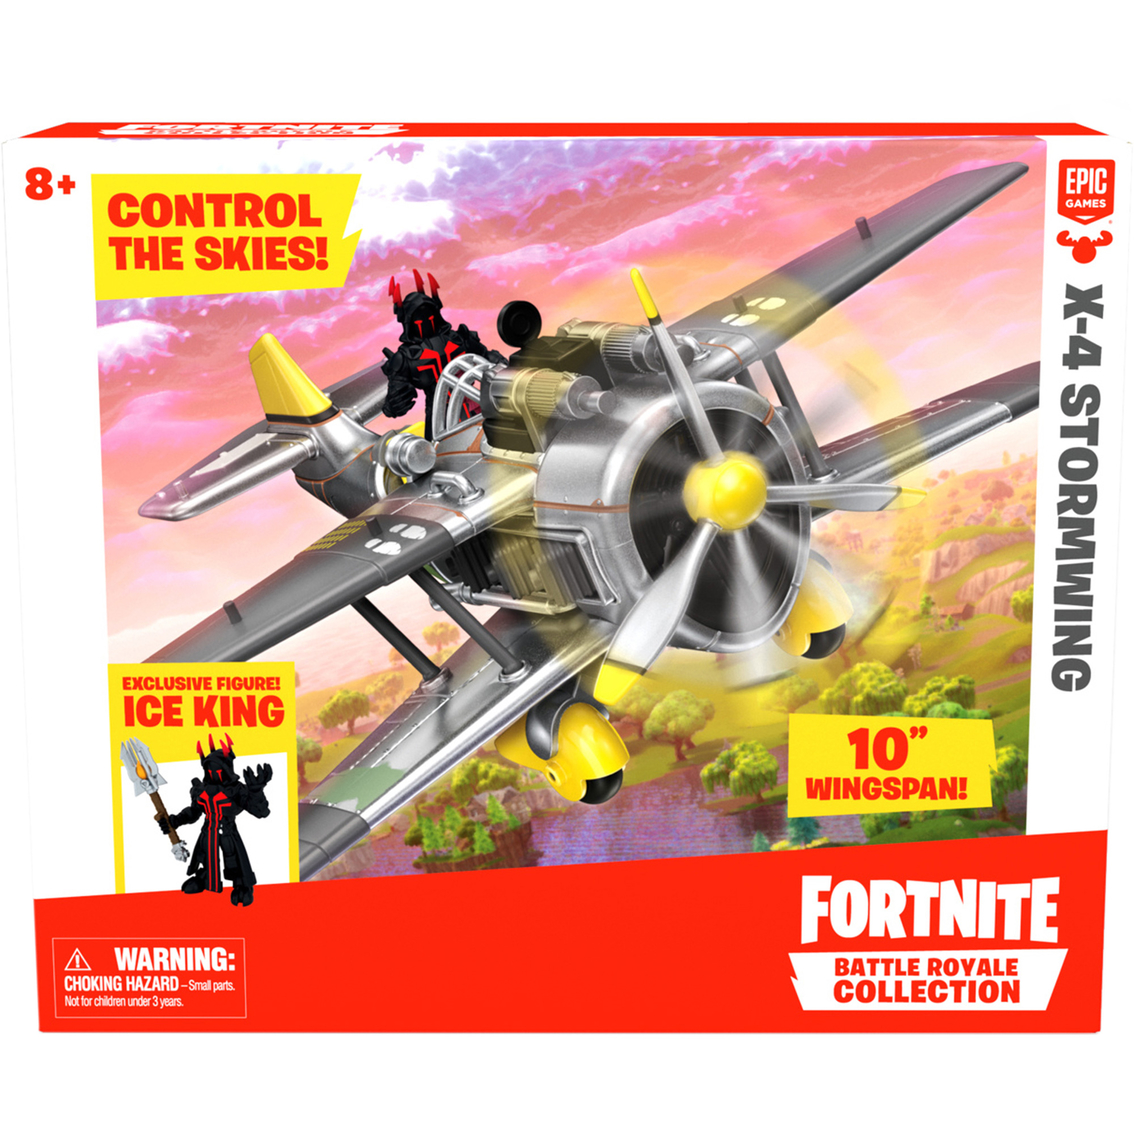 toy plane sets